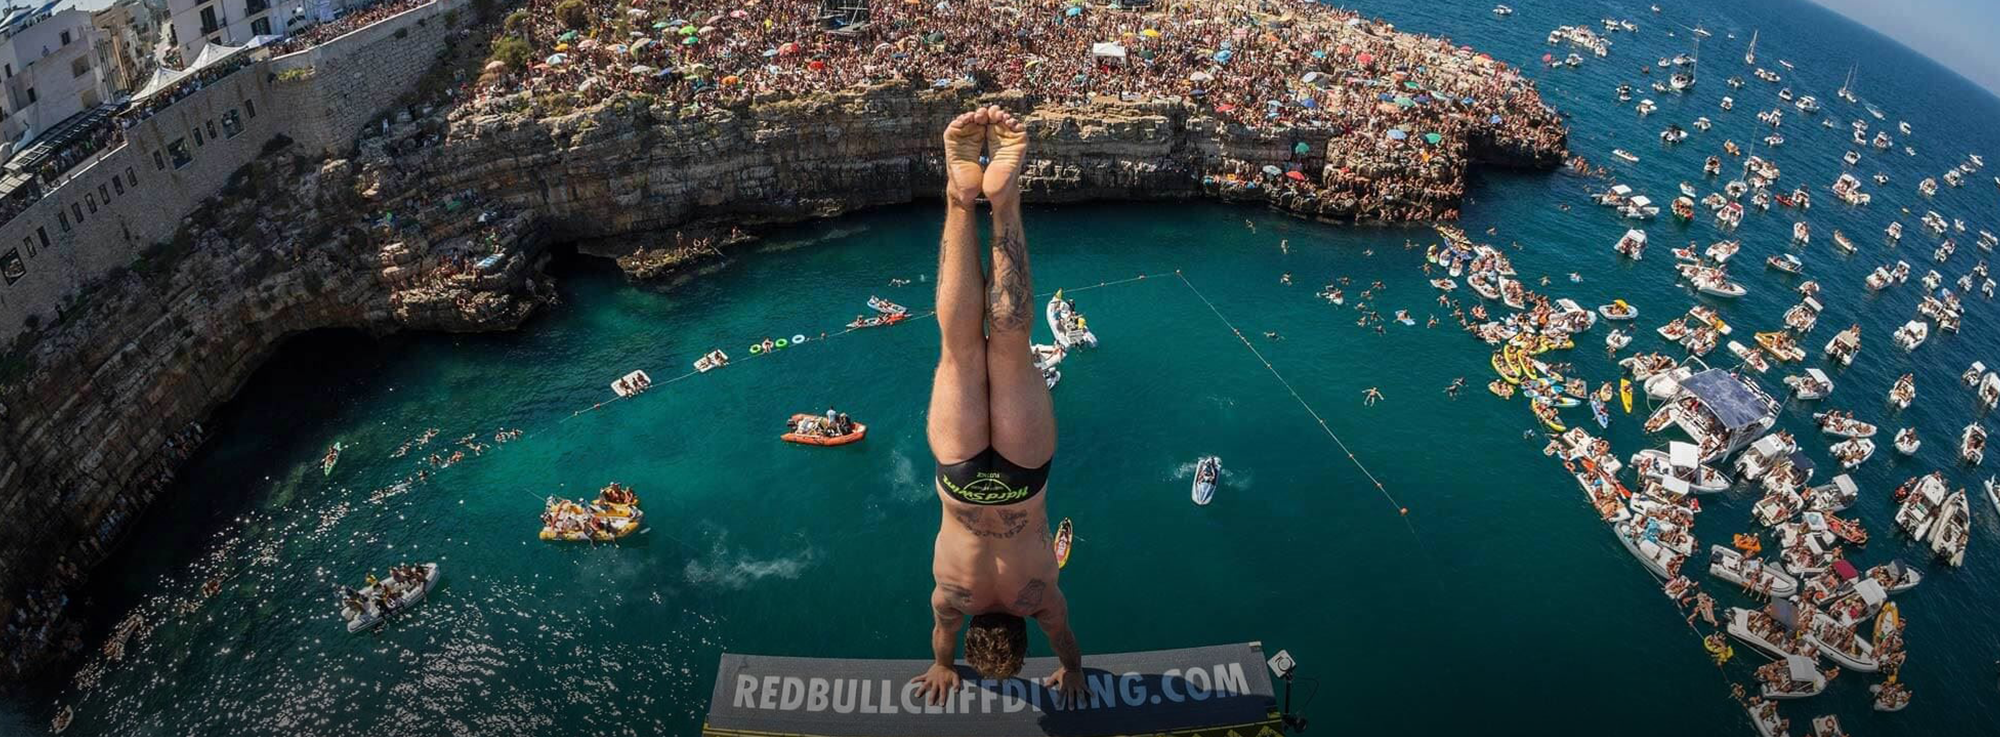 Polignano a Mare: Red Bull Cliff Diving 2018